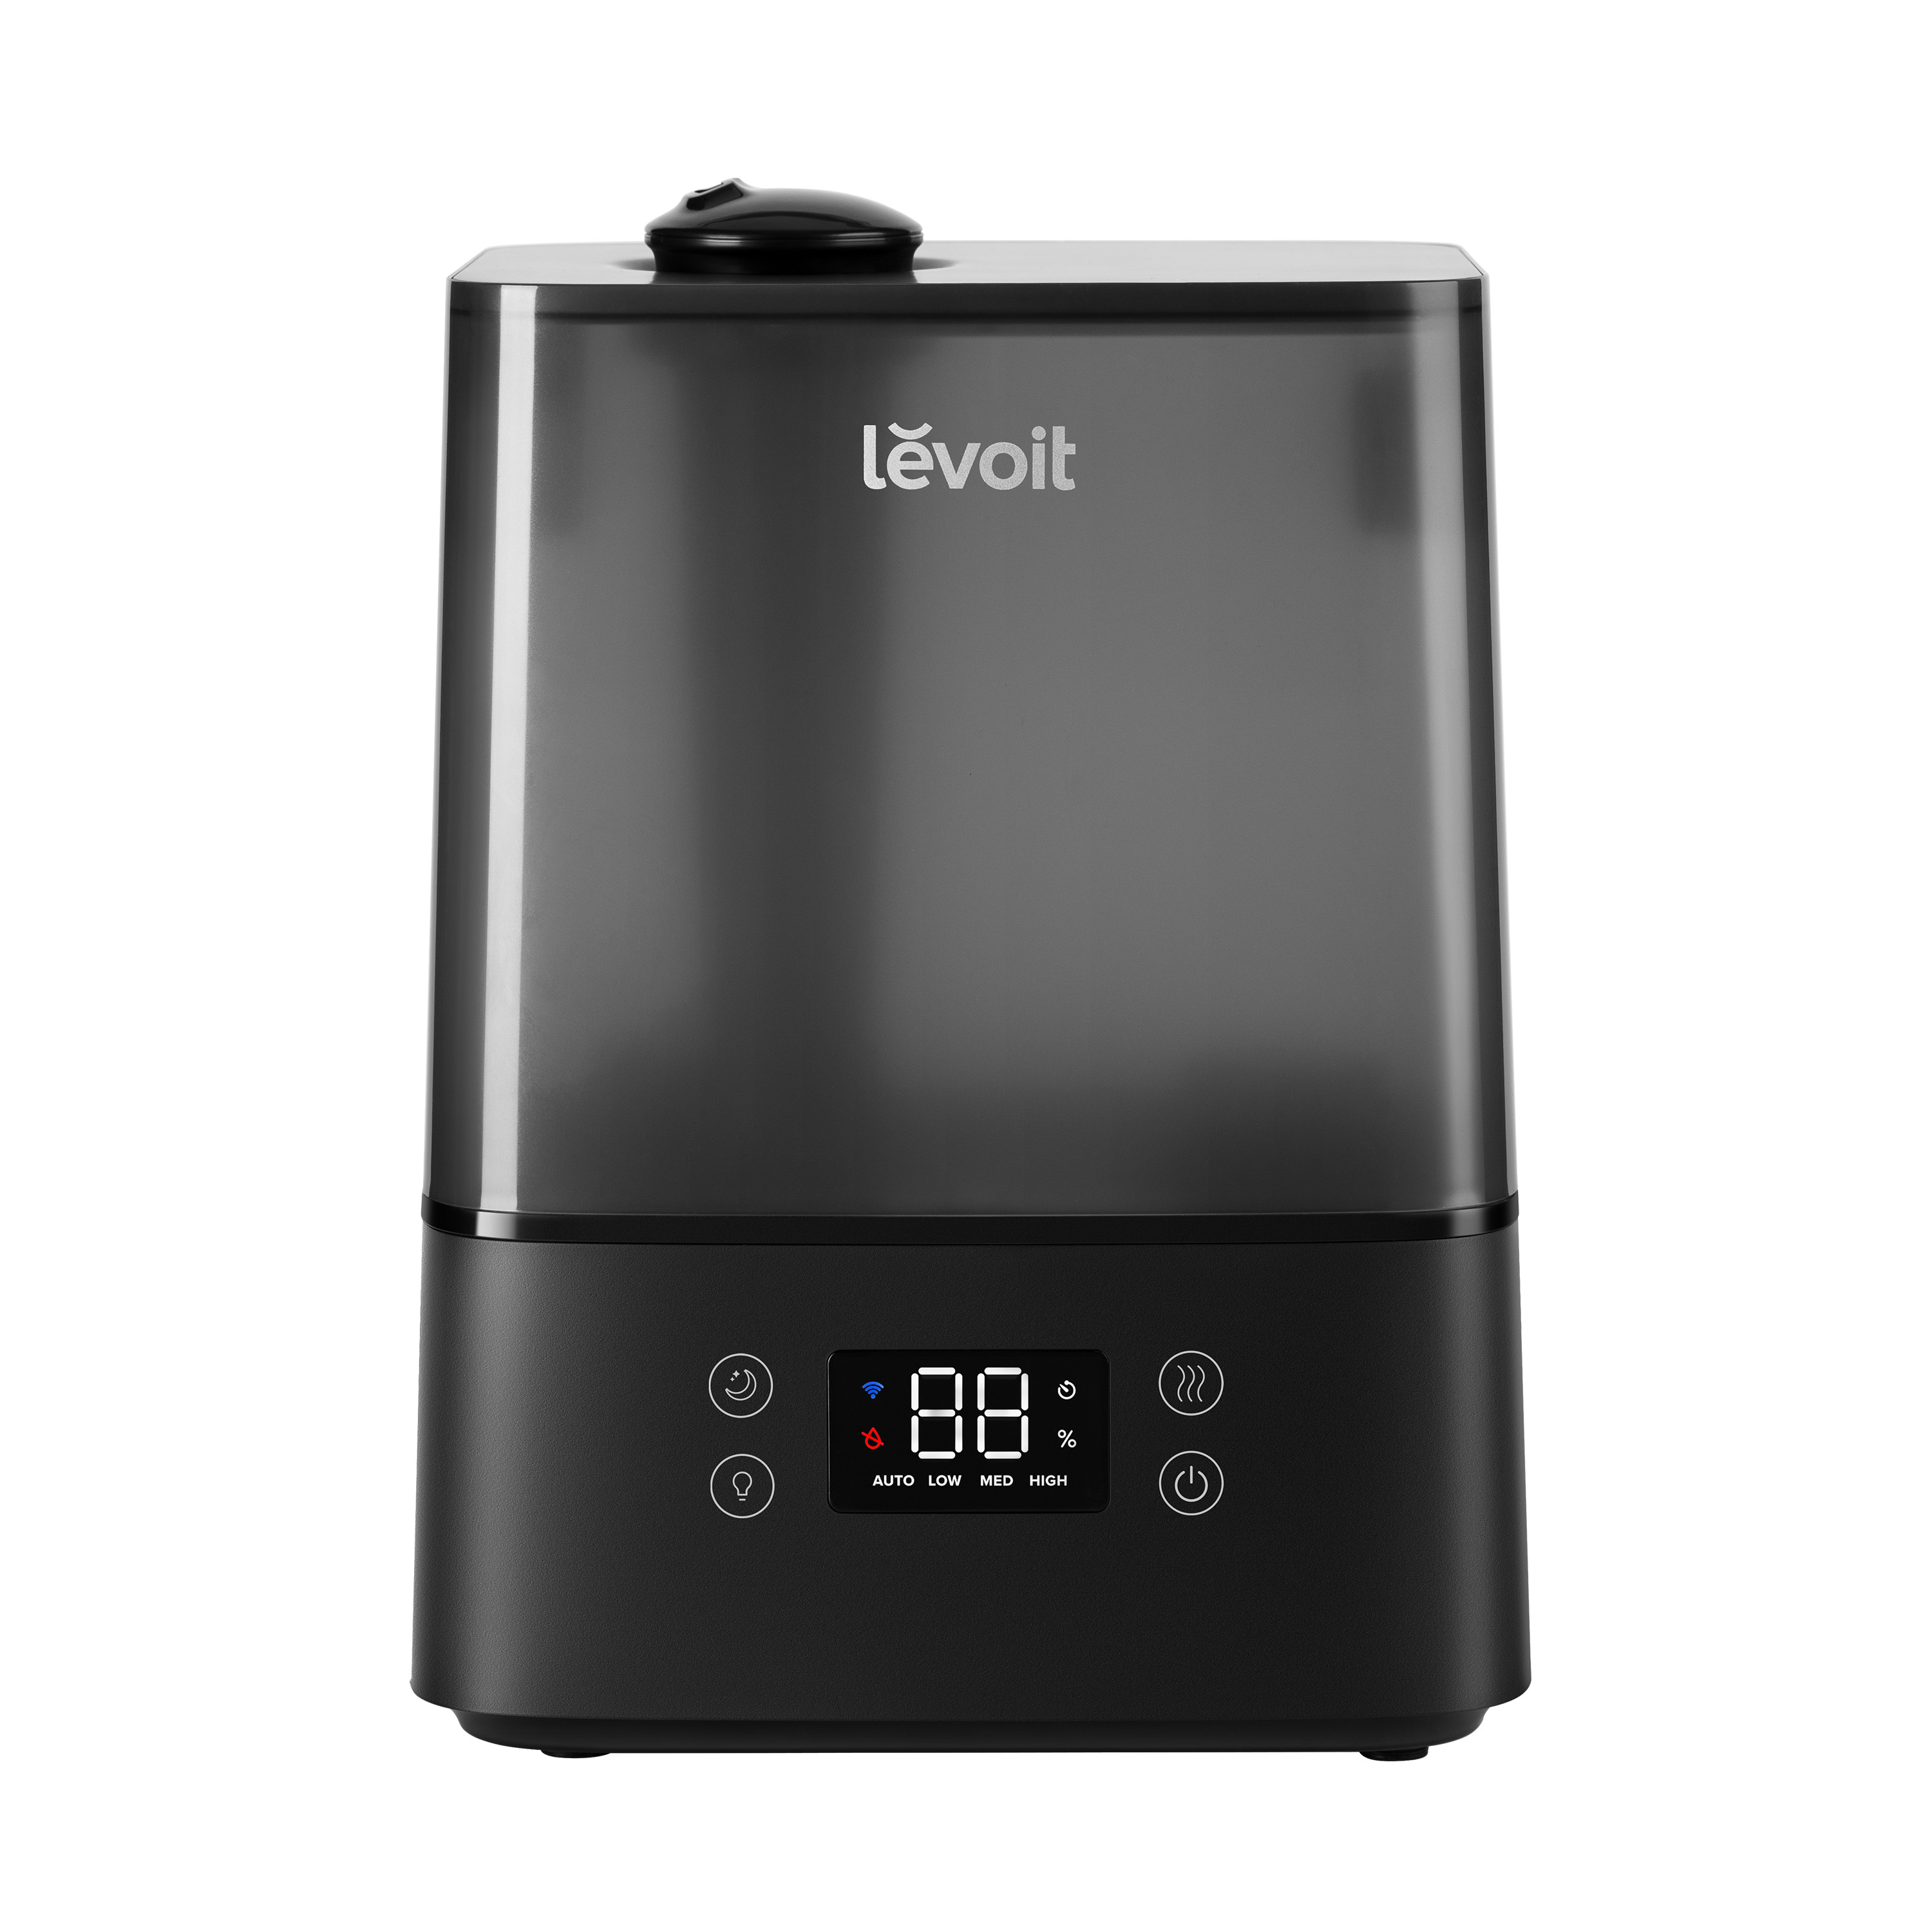 LEVOIT Levoit Classic schwarz Smart 47 m²) 300S Luftbefeuchter (Raumgröße: Humidifier Ultrasonic Pro